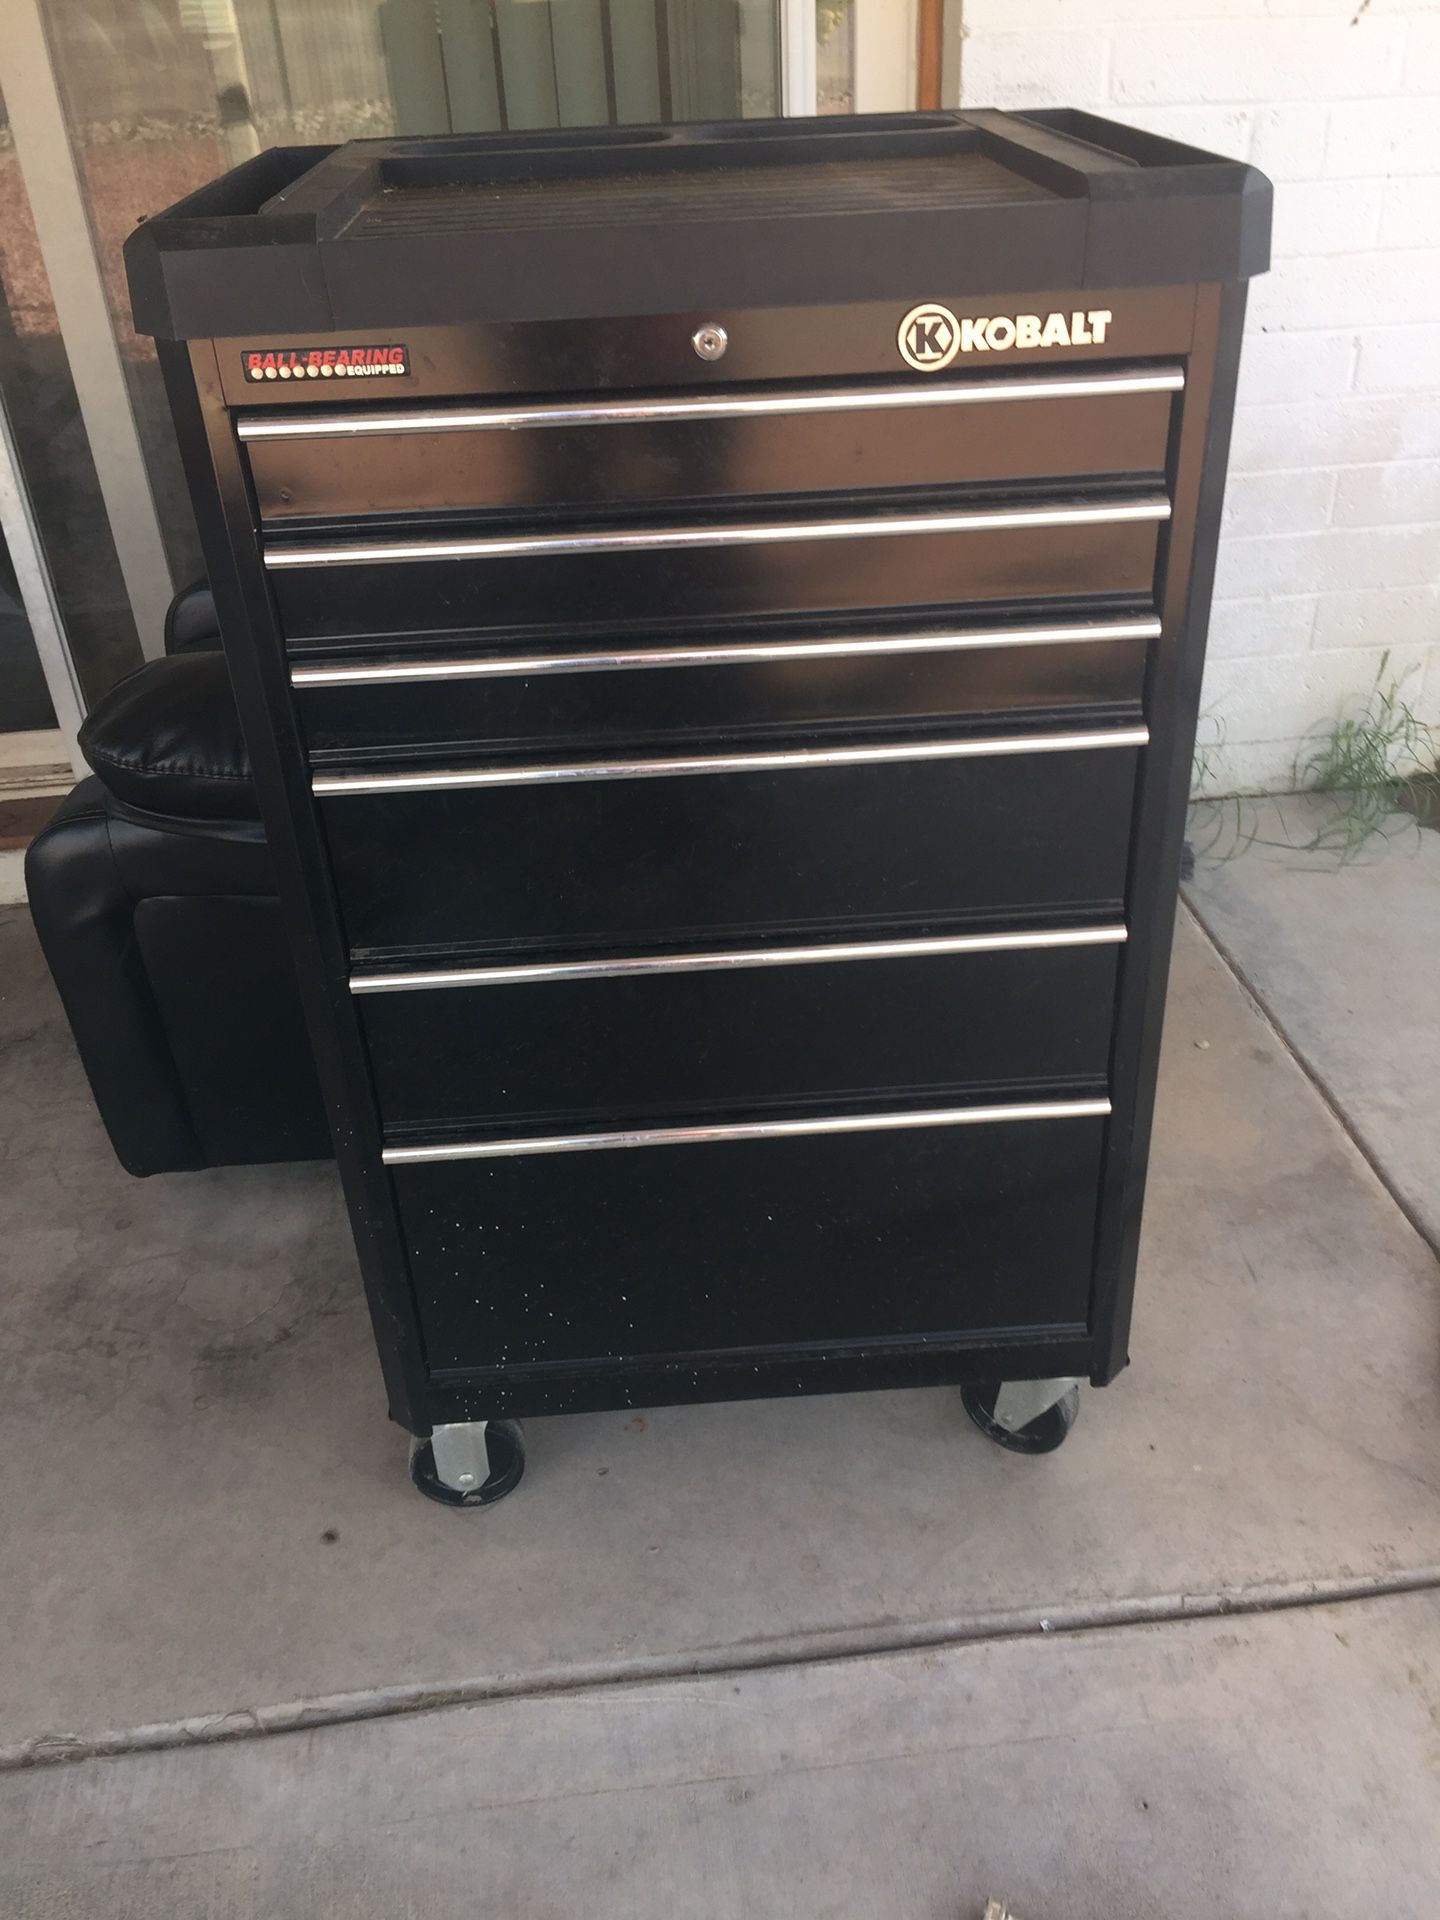 Kobalt 6 drawer tool chest - no key